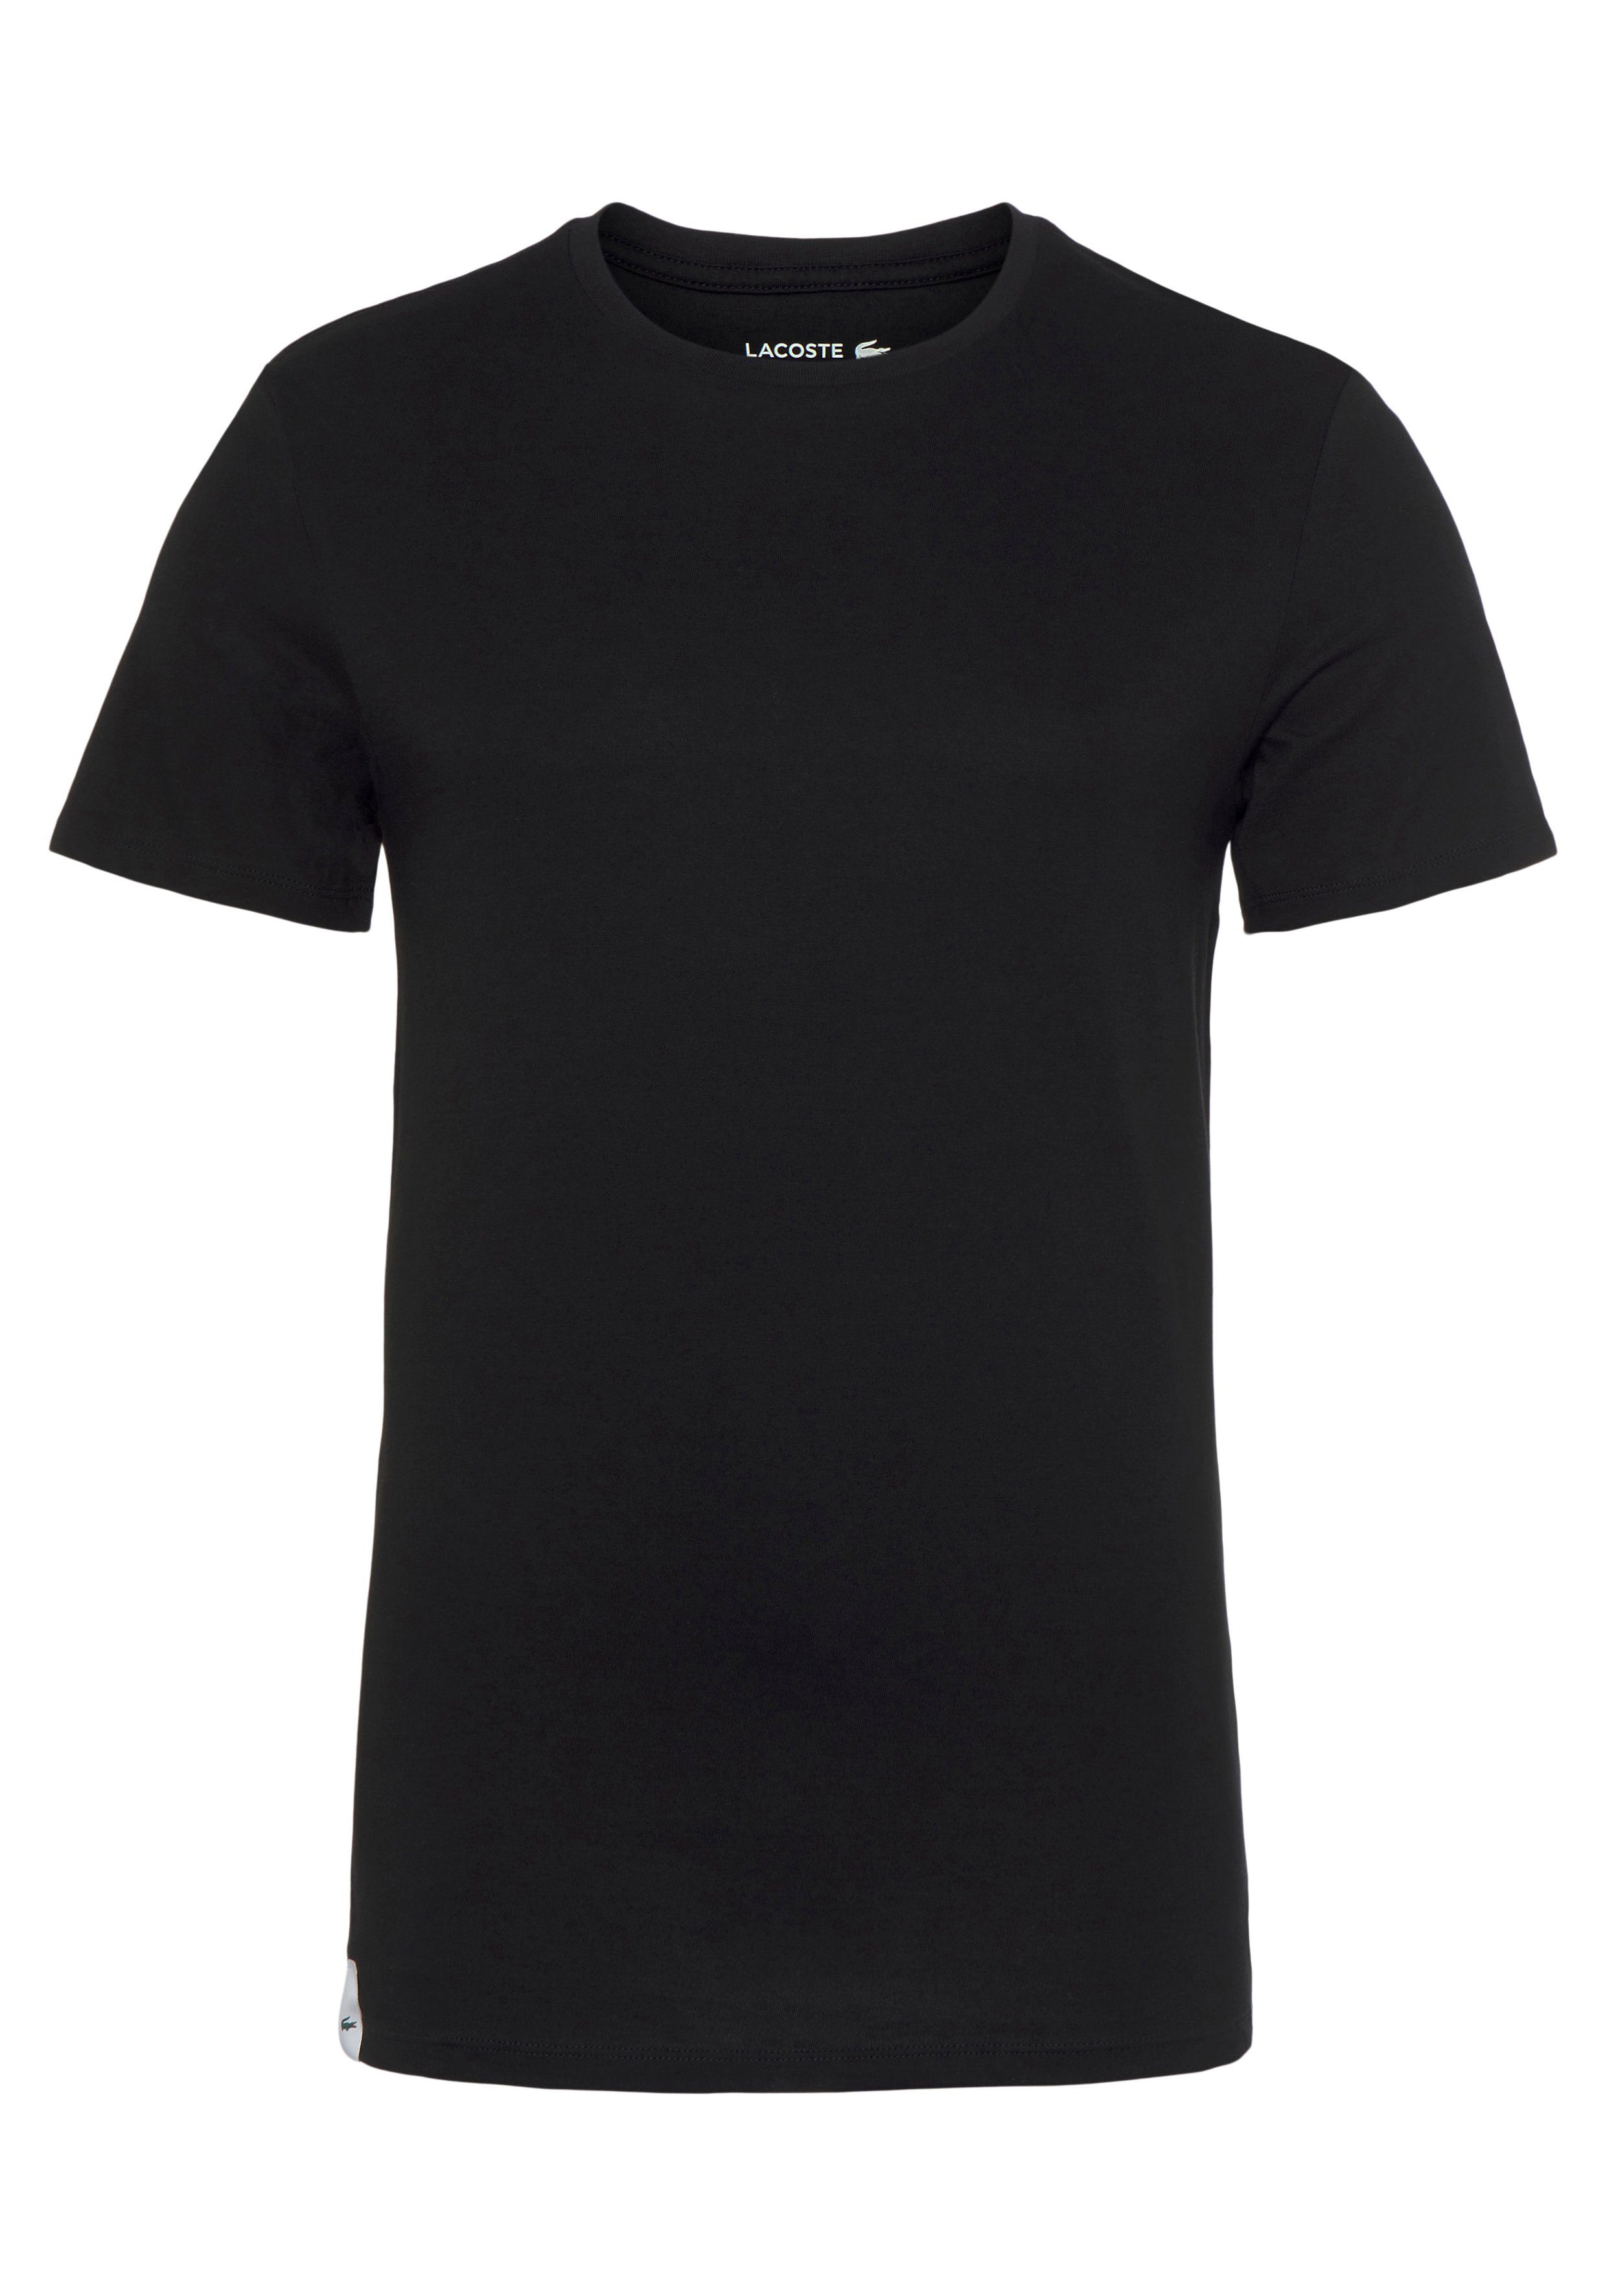 black für Hautgefühl Atmungsaktives Lacoste angenehmes T-Shirt Baumwollmaterial (3er-Pack)